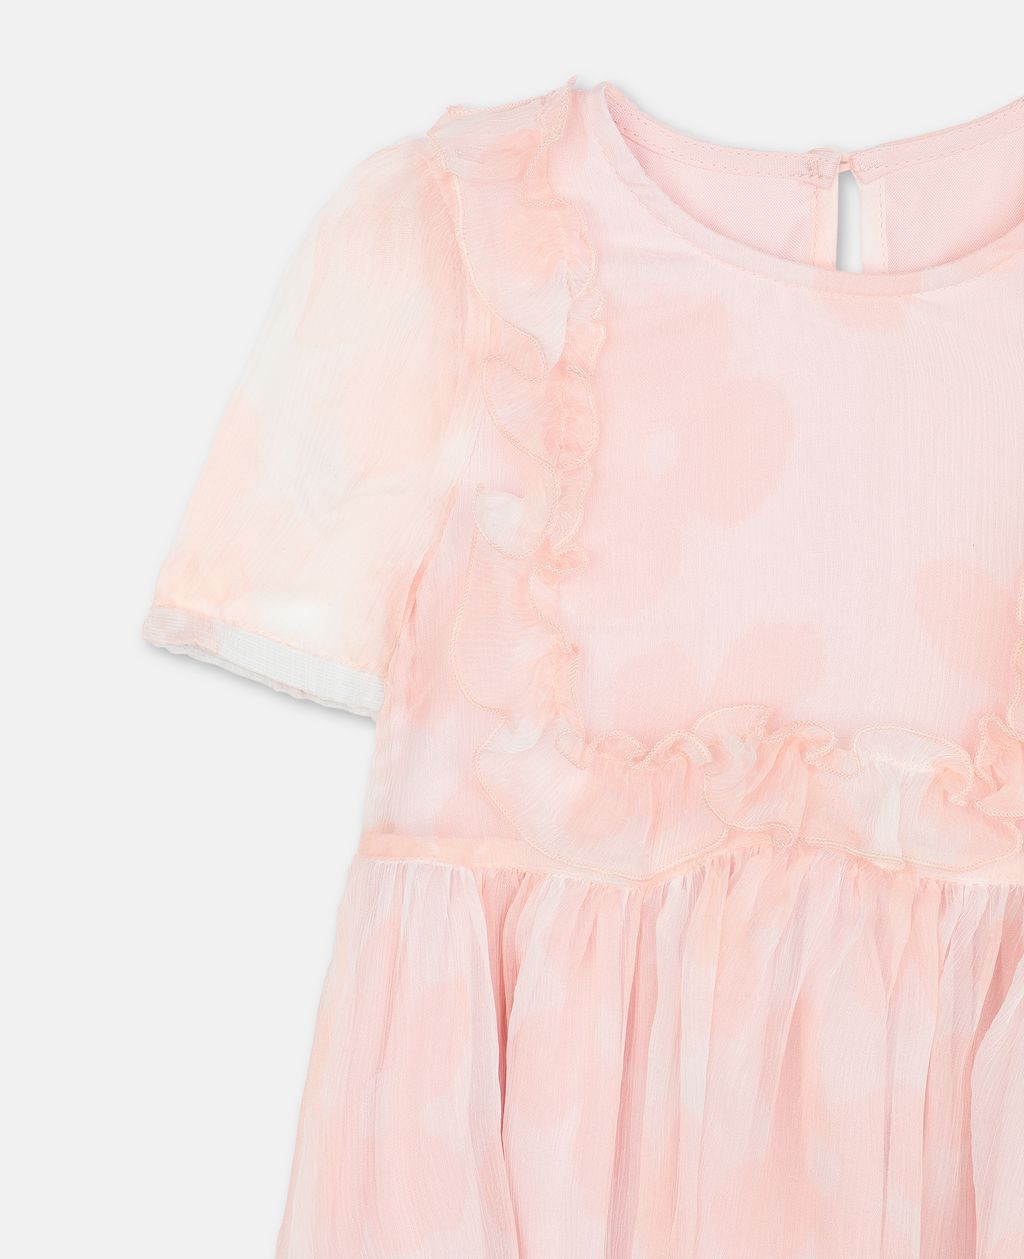 Baby Girls Pink Silk Dress